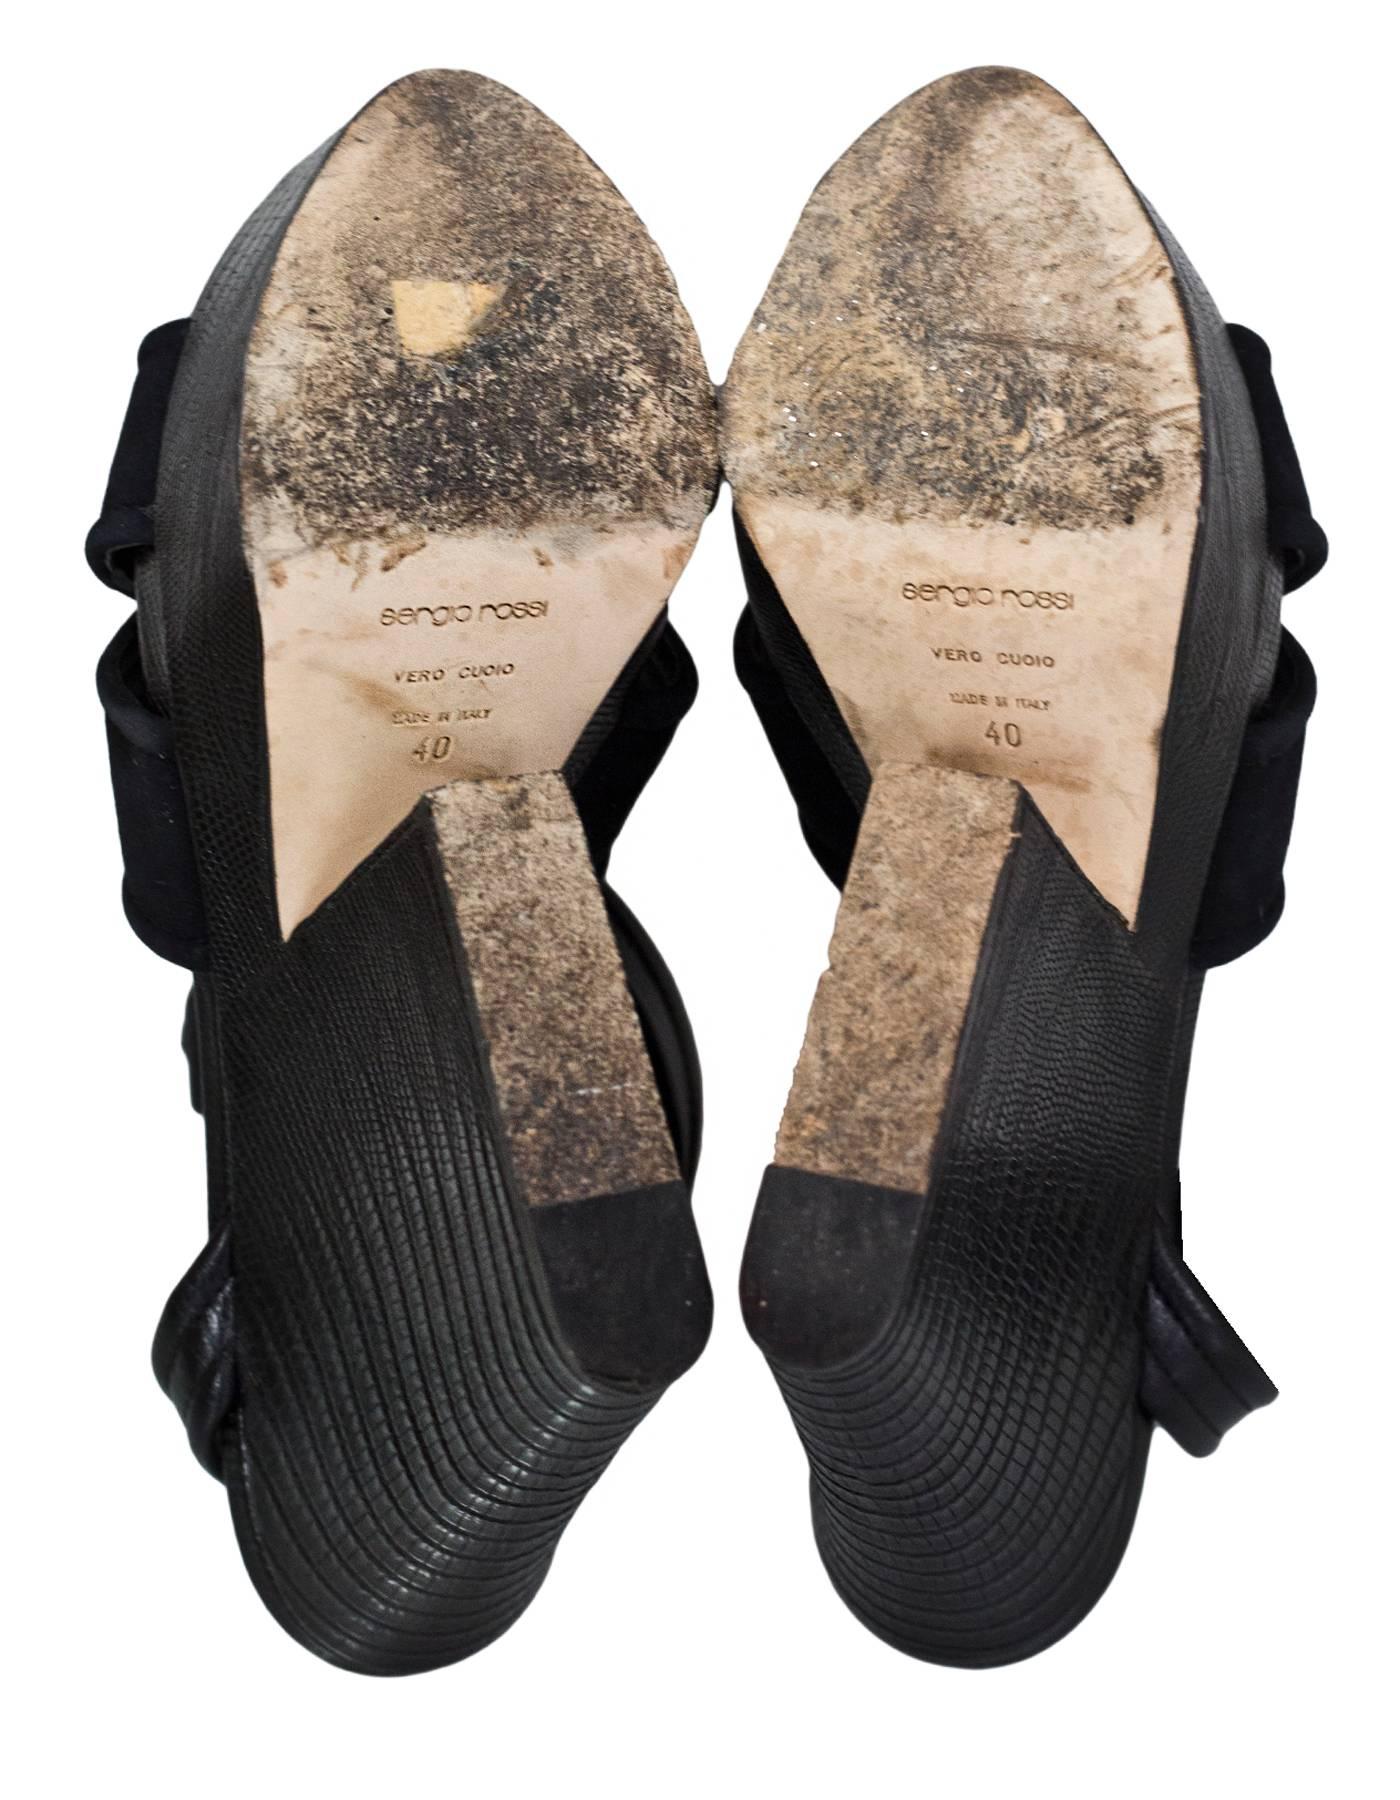 Sergio Rossi Black Suede & Embossed Leather Sandals Sz 40 1